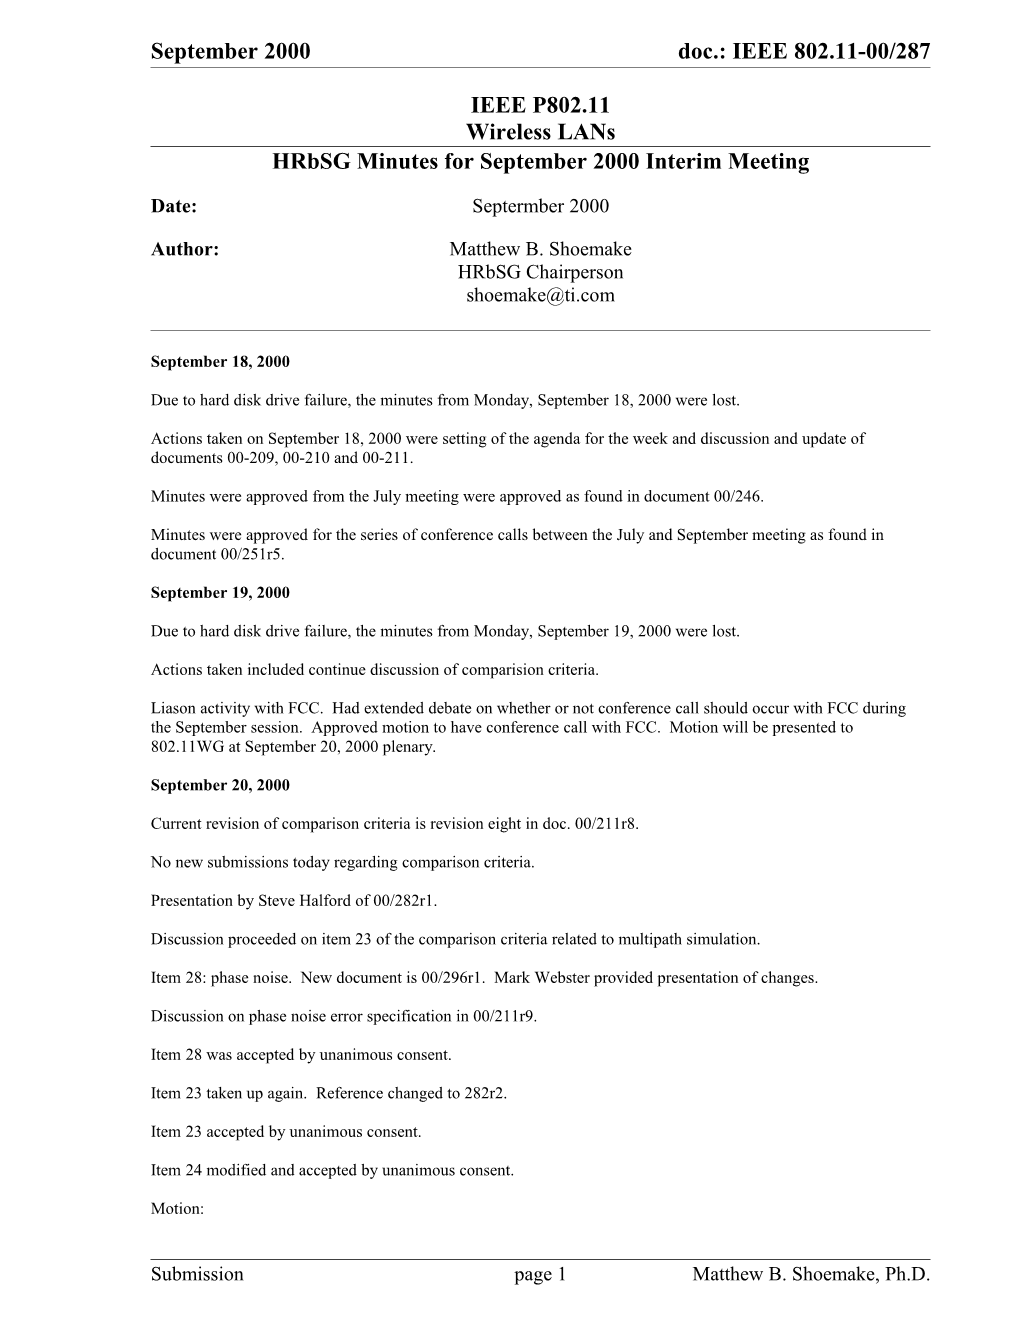 Hrbsg Minutes for September 2000 Interim Meeting